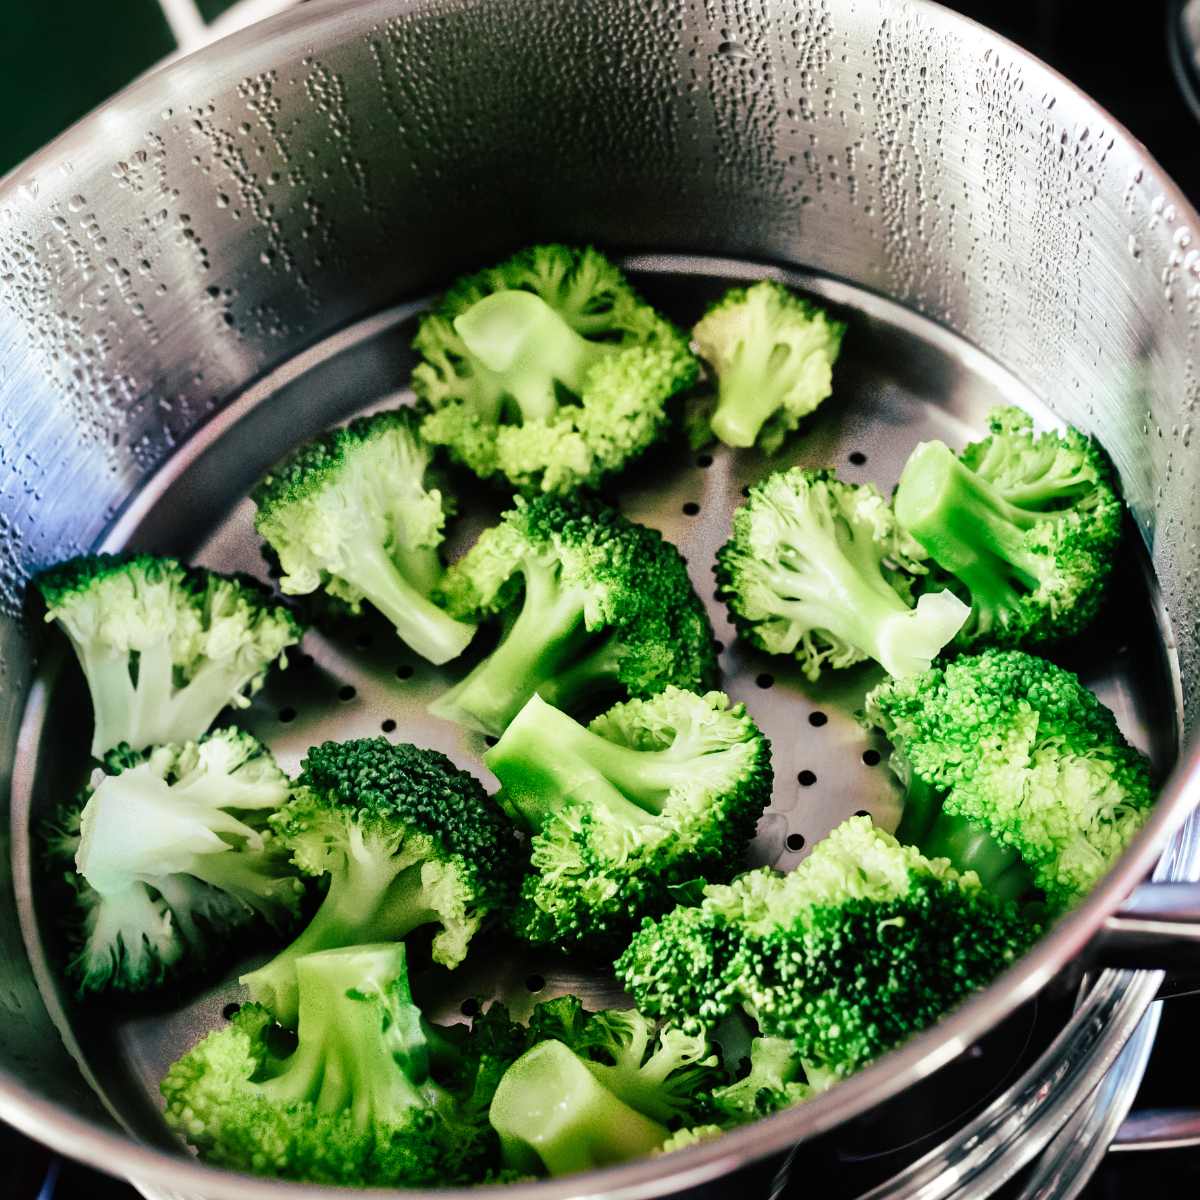 Steamed broccoli in a metal steamer basket.